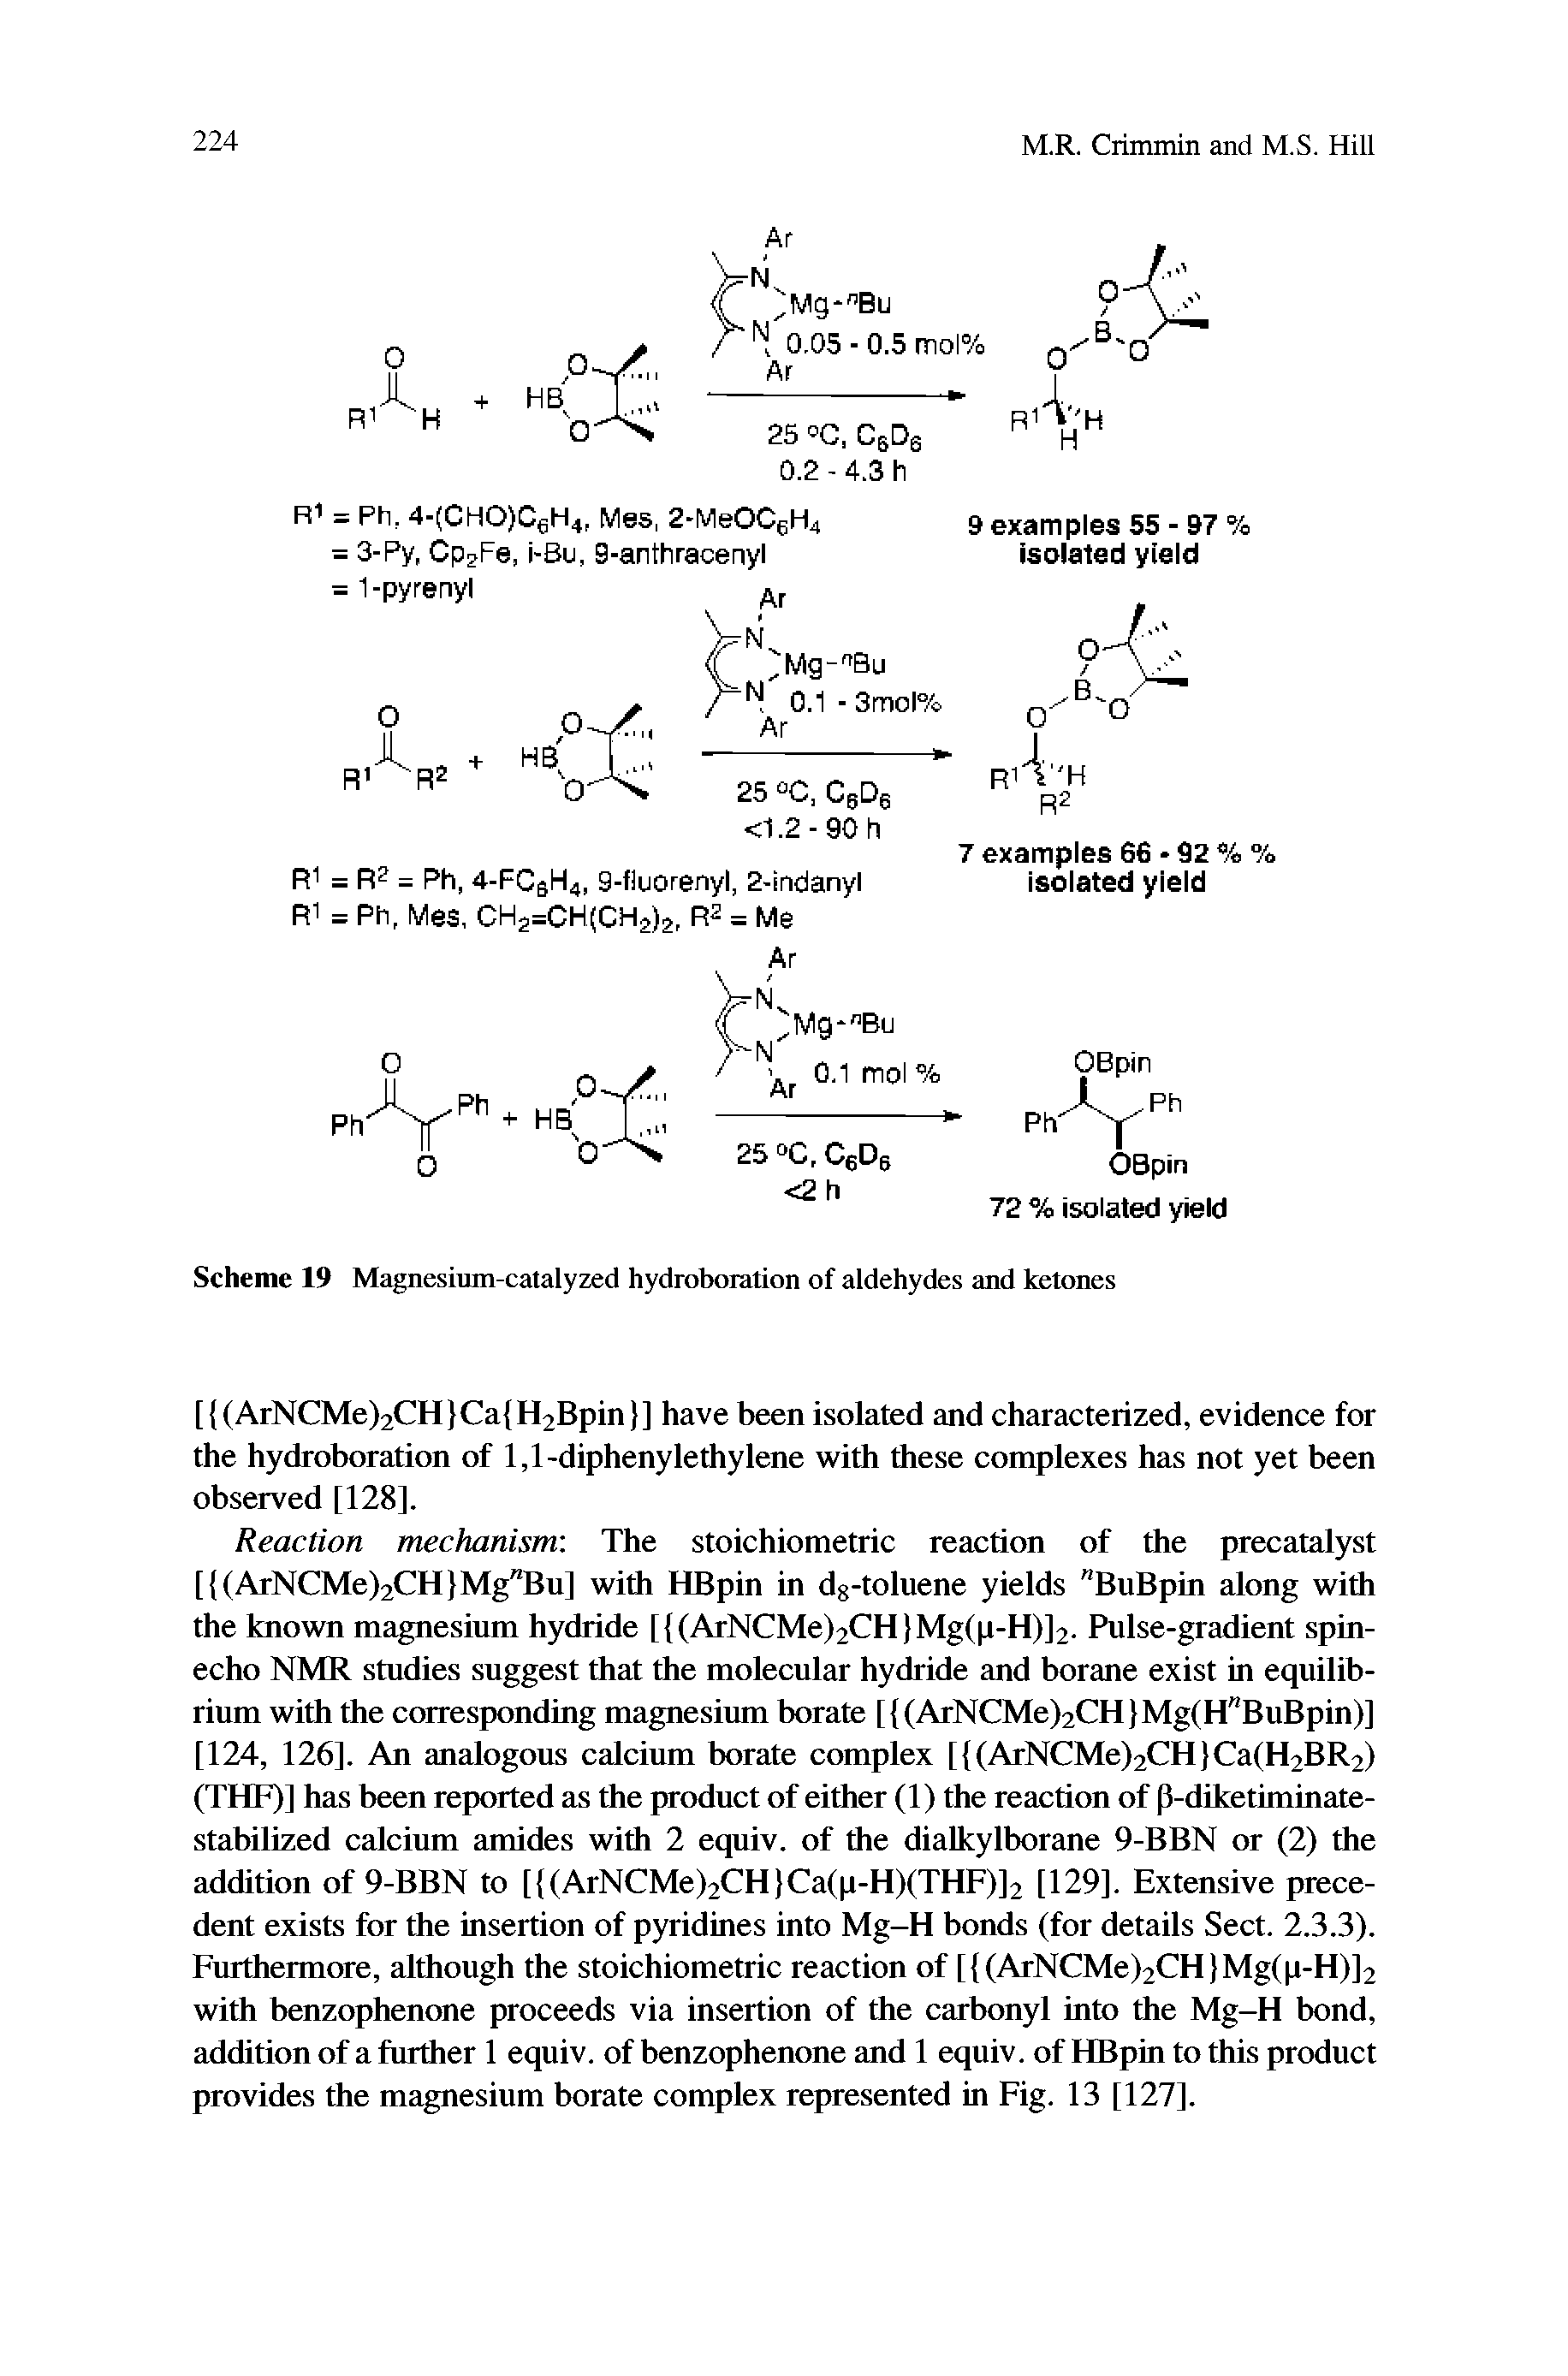 Scheme 19 Magnesium-catalyzed hydroboiation of aldehydes and ketones...